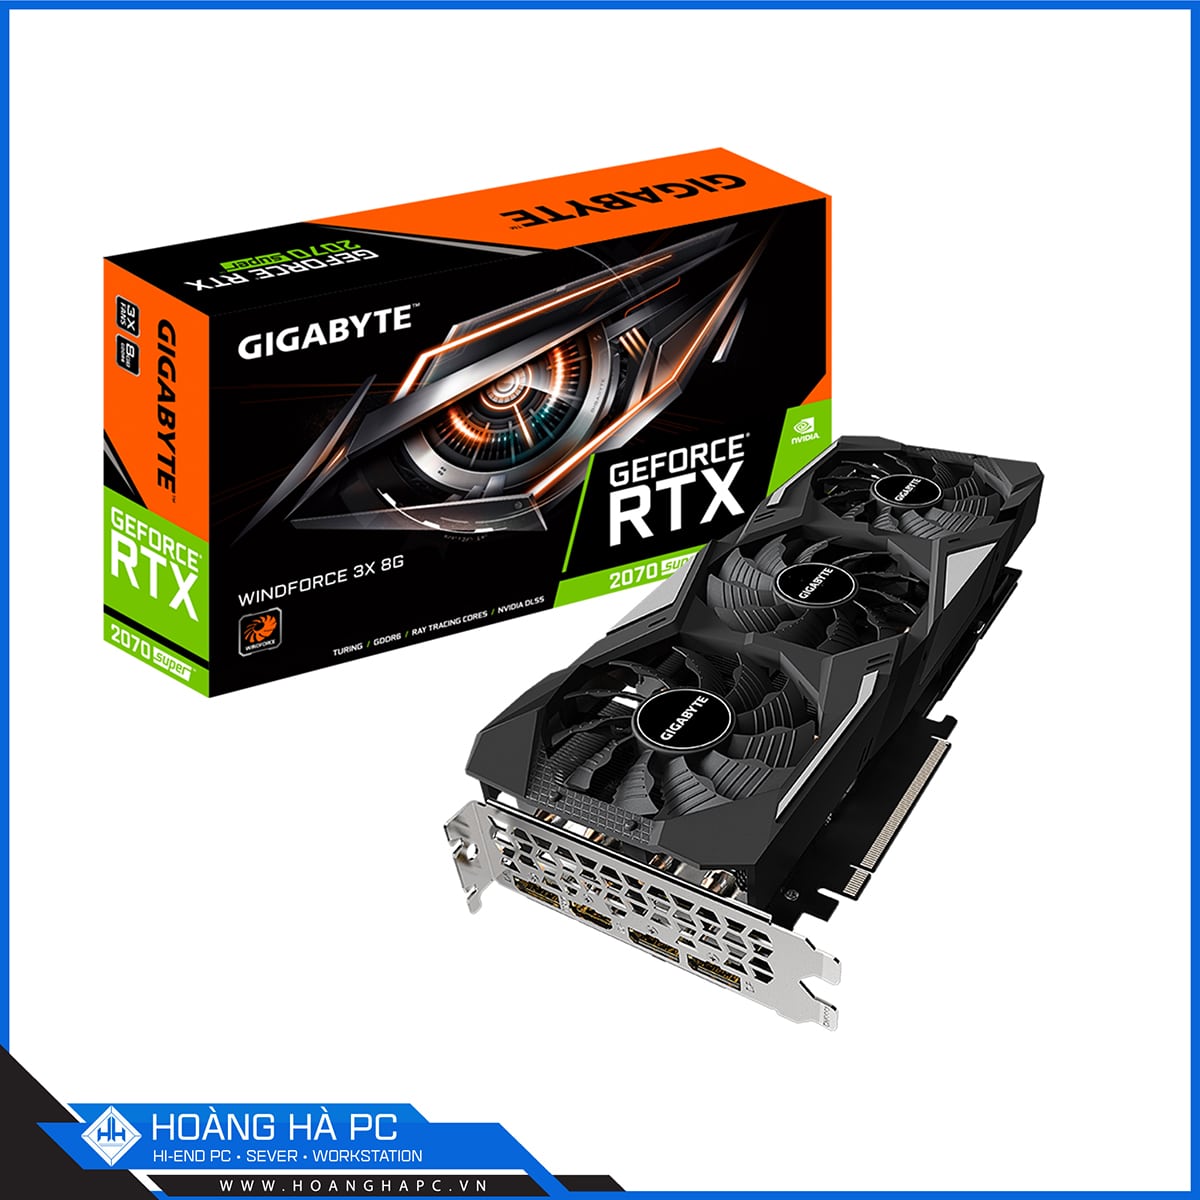 ;GIGABYTE GeForce RTX 2070 SUPER WINDFORCE 3X 8G